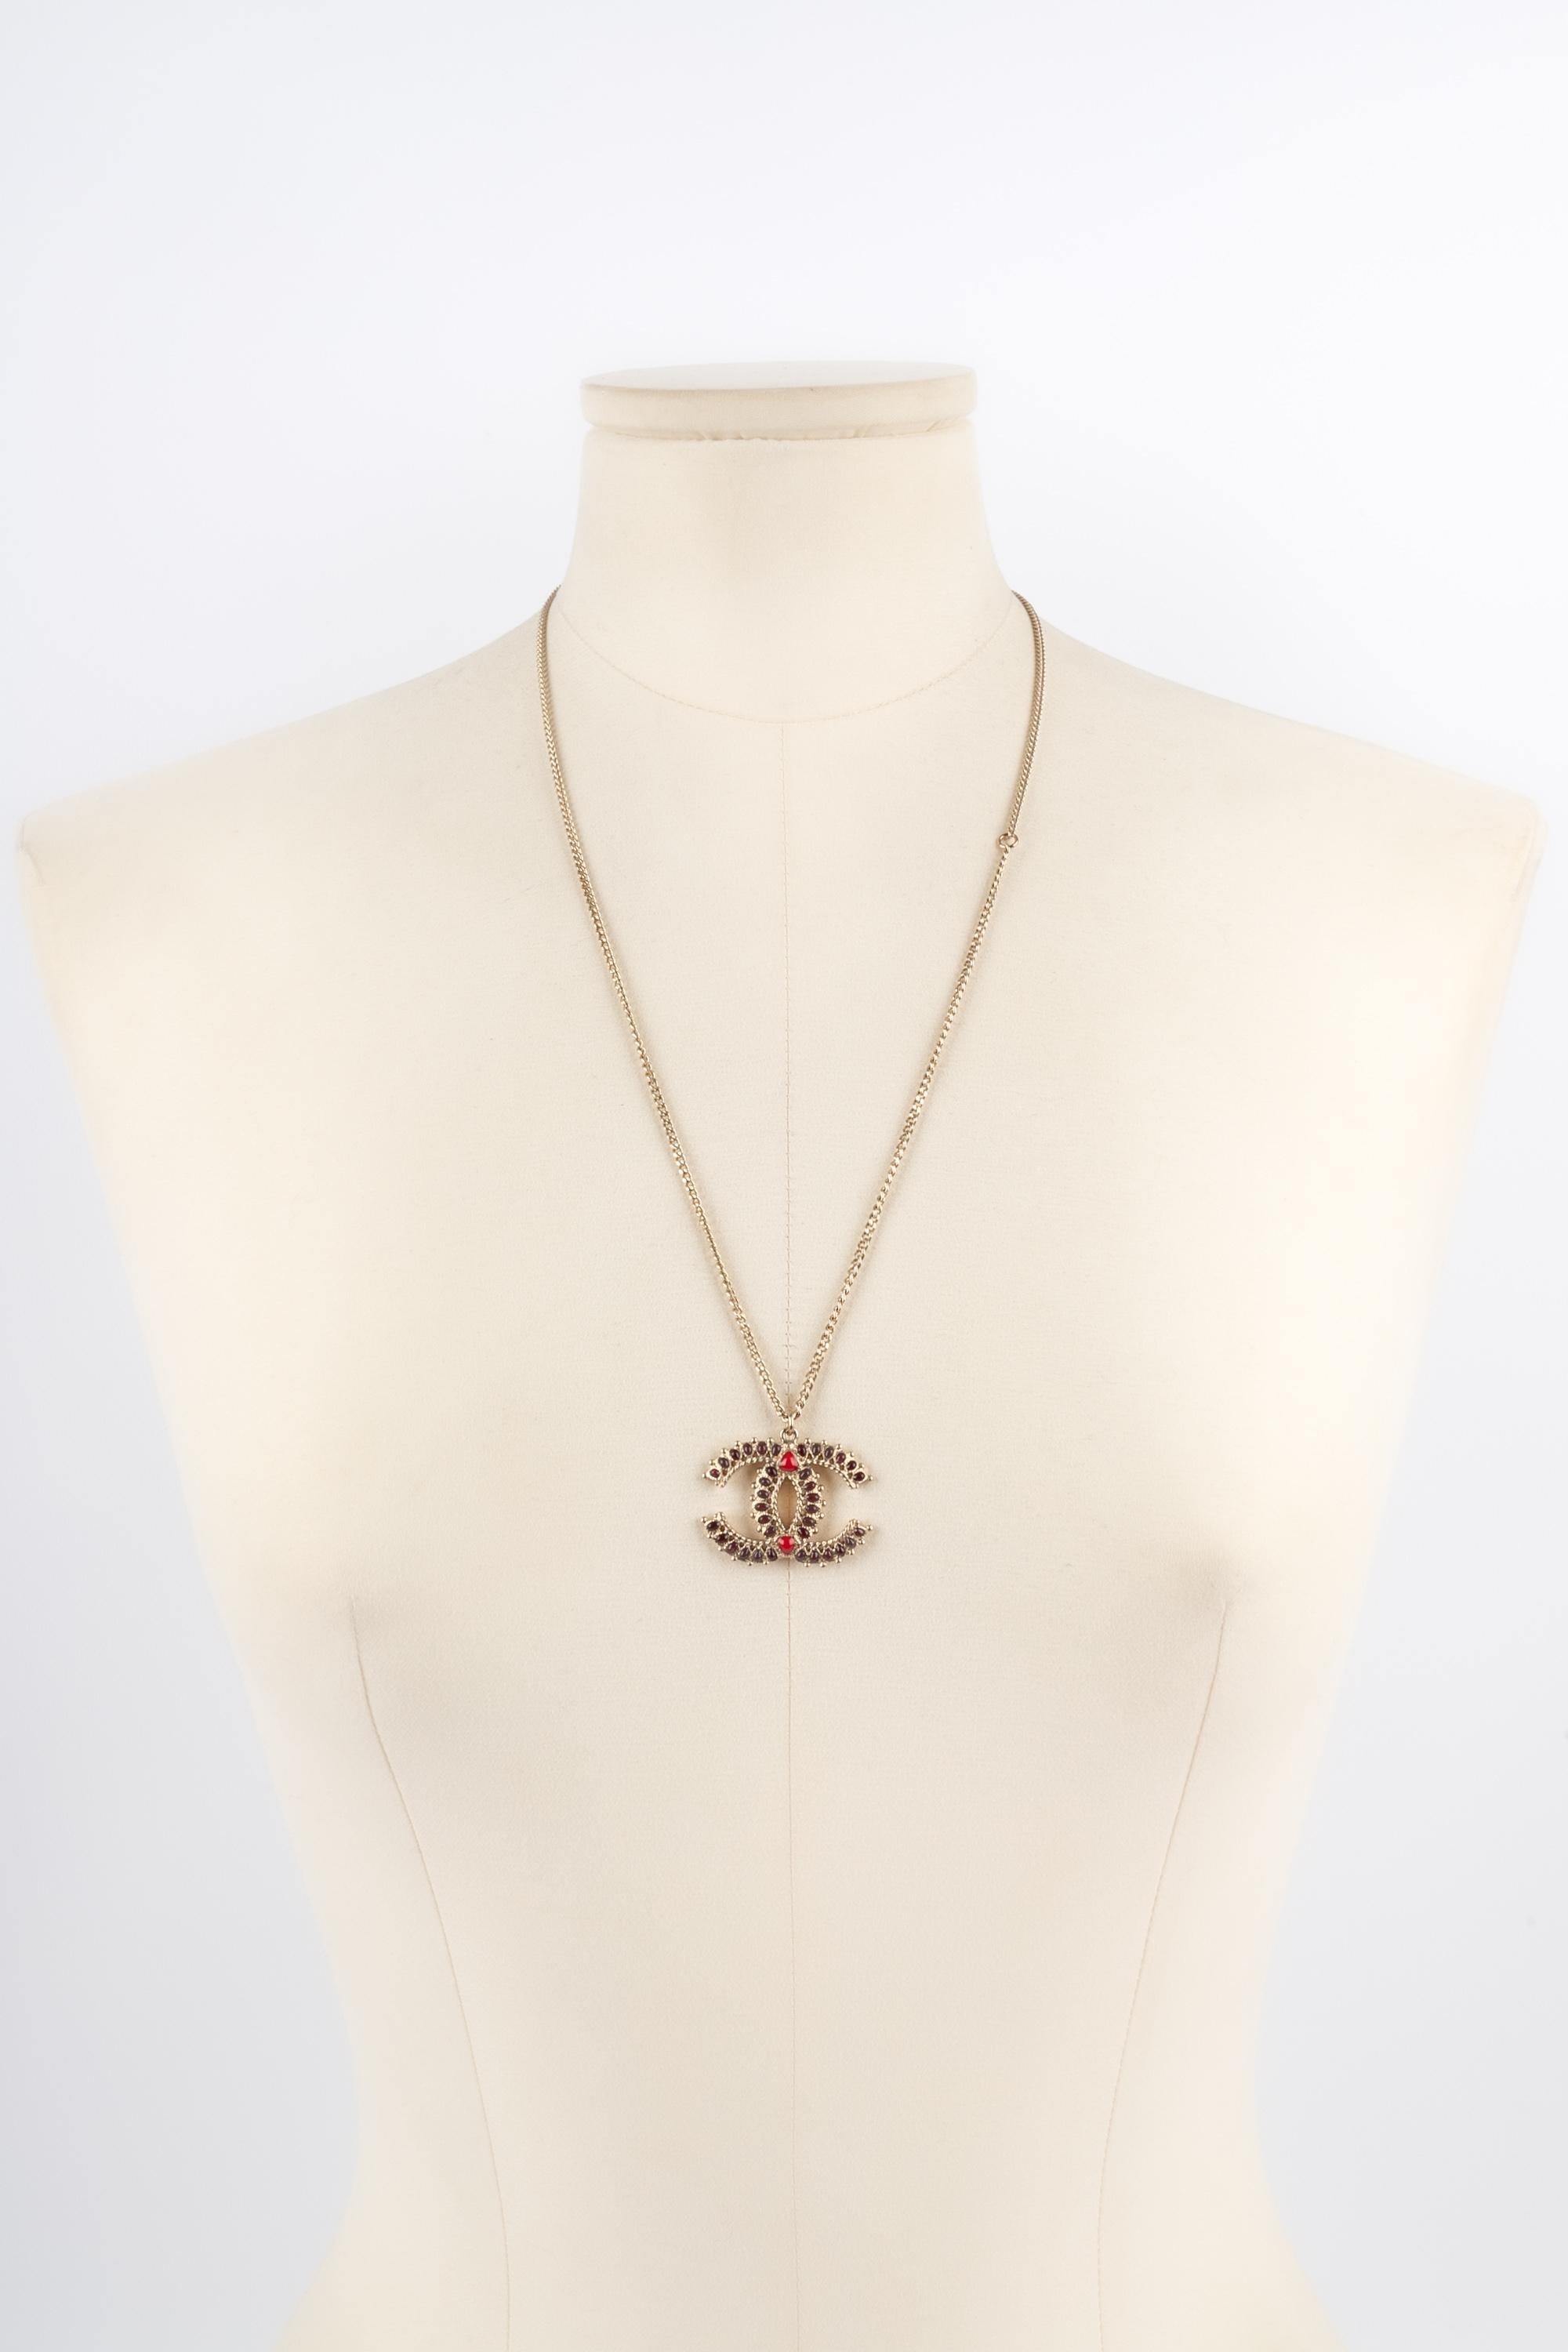 Chanel cc necklace 2014 1